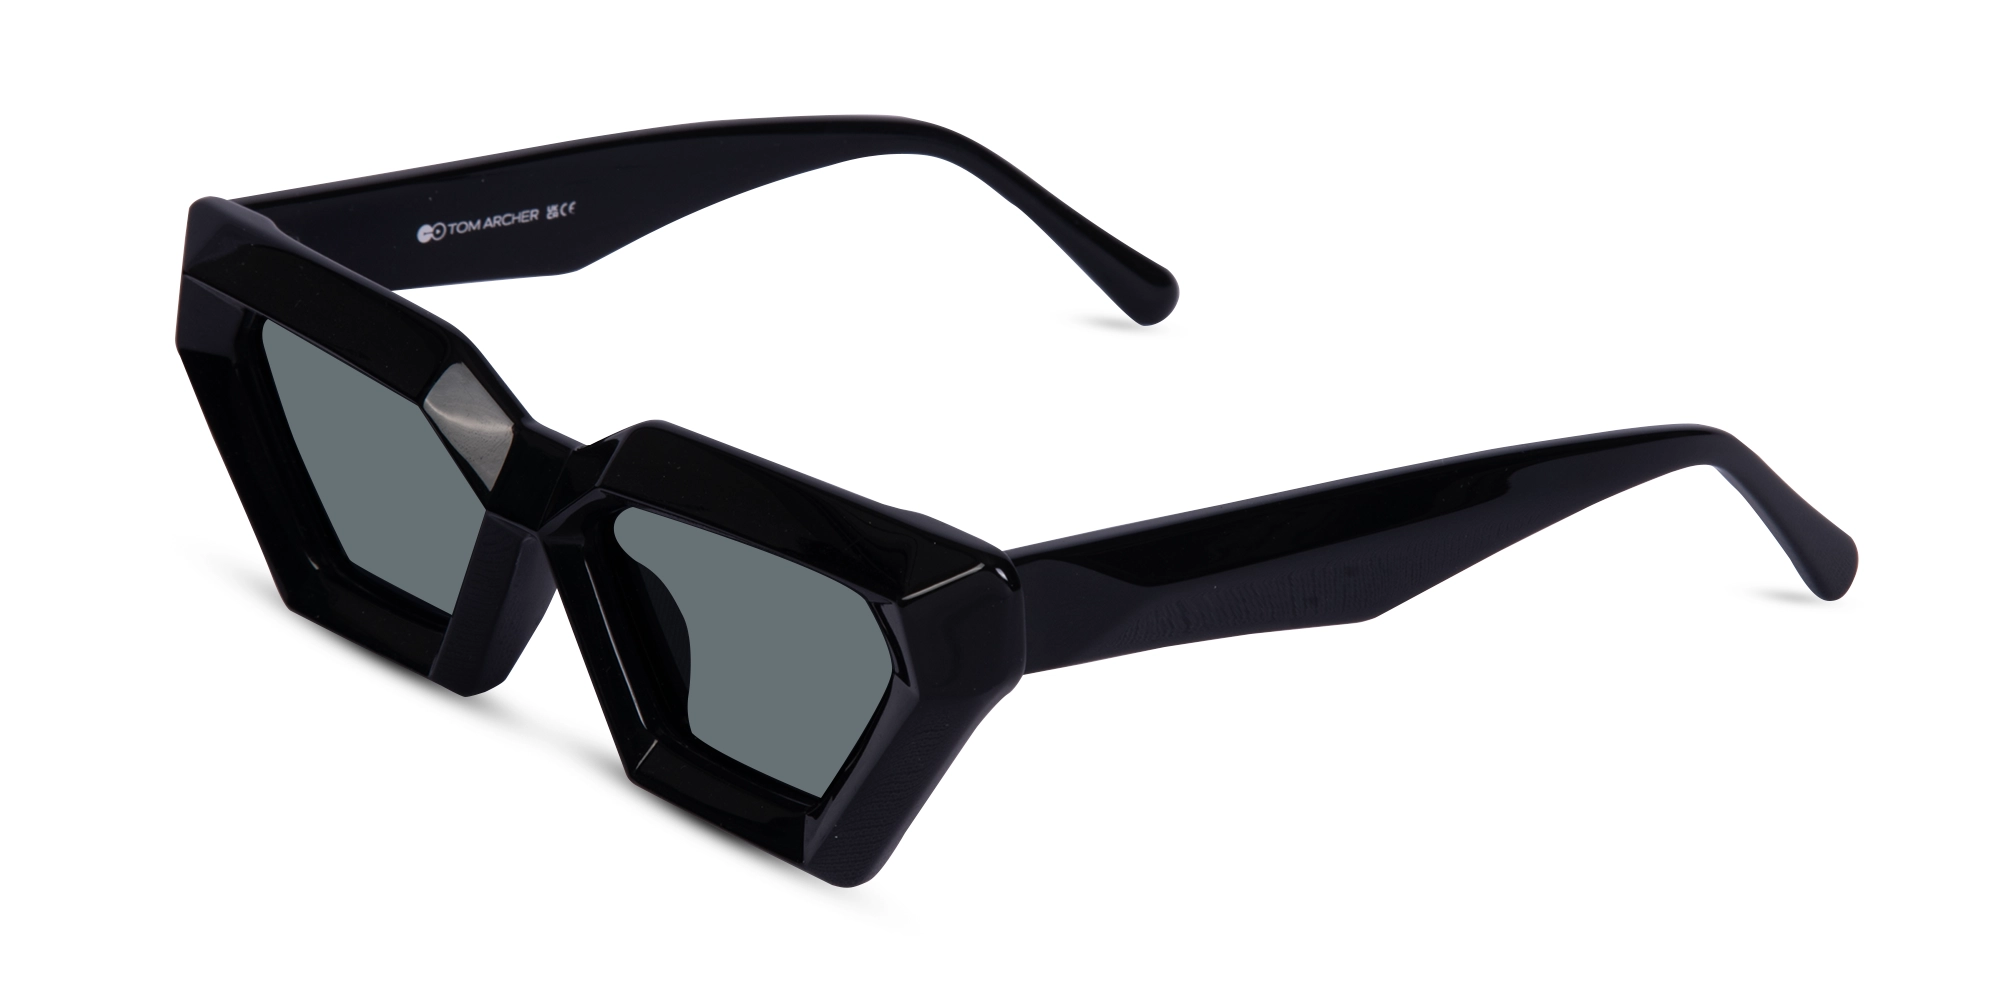 Black Cat Eye Sunglasses-1